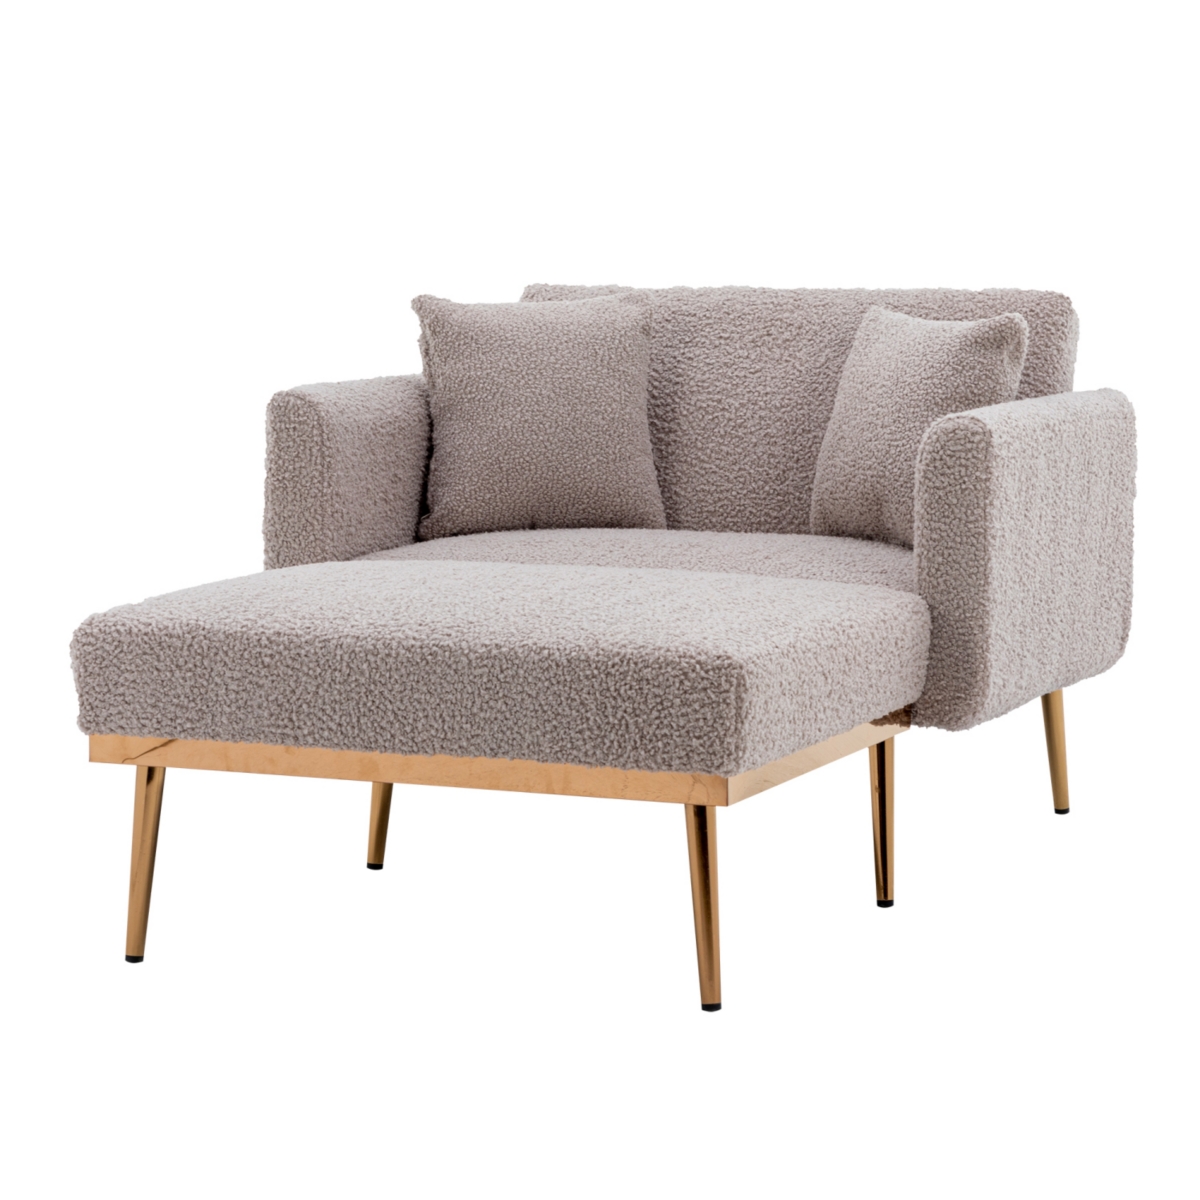 Simplie Fun Chaise Lounge Chair /accent Chair In Grey